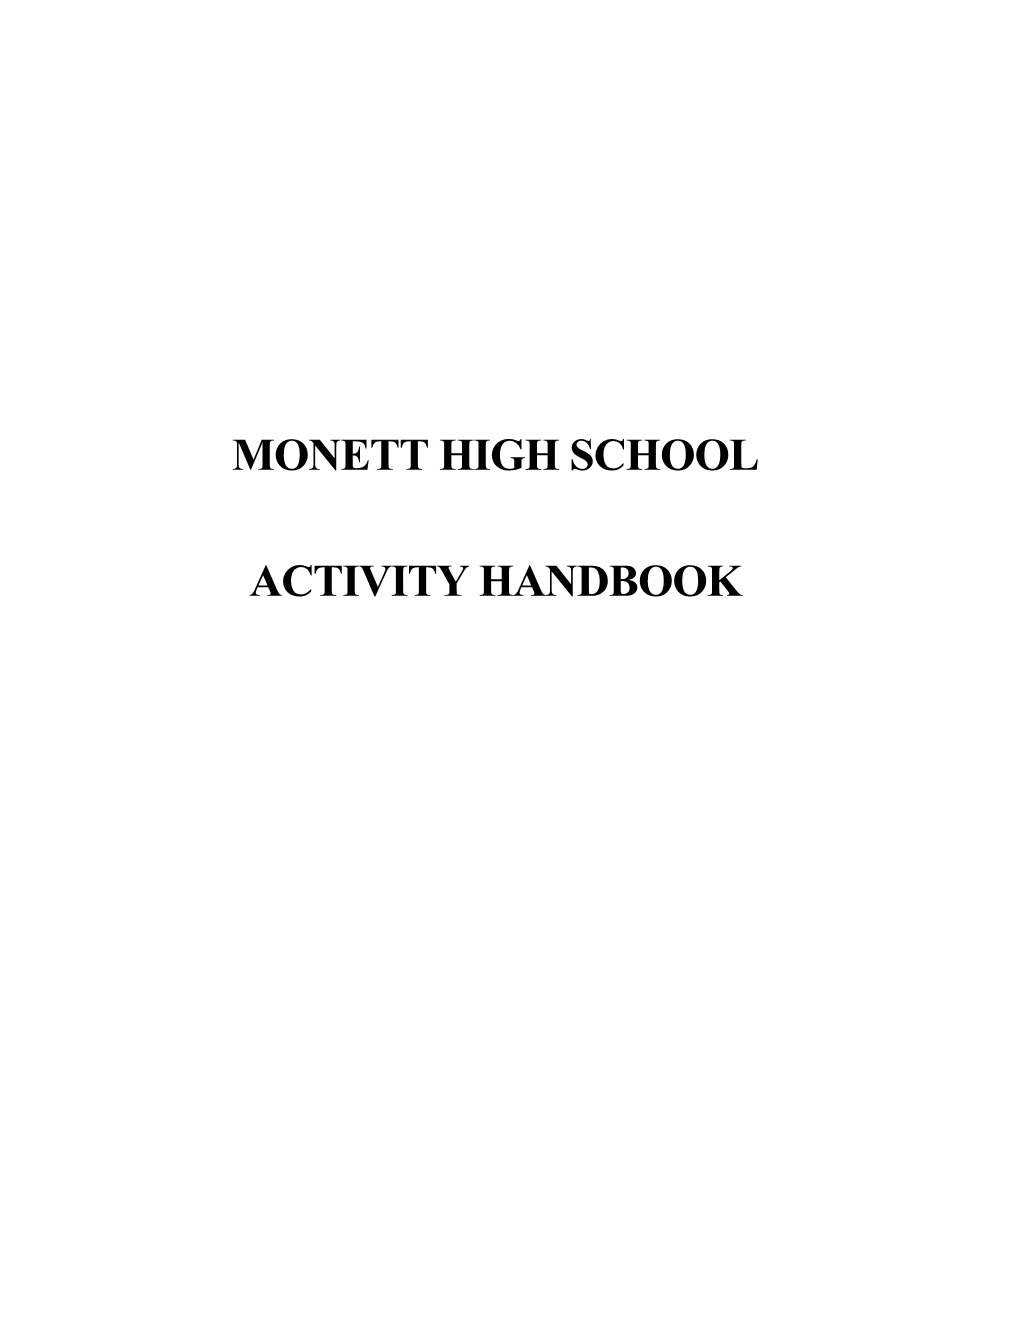 Monett High School Activity Handbook